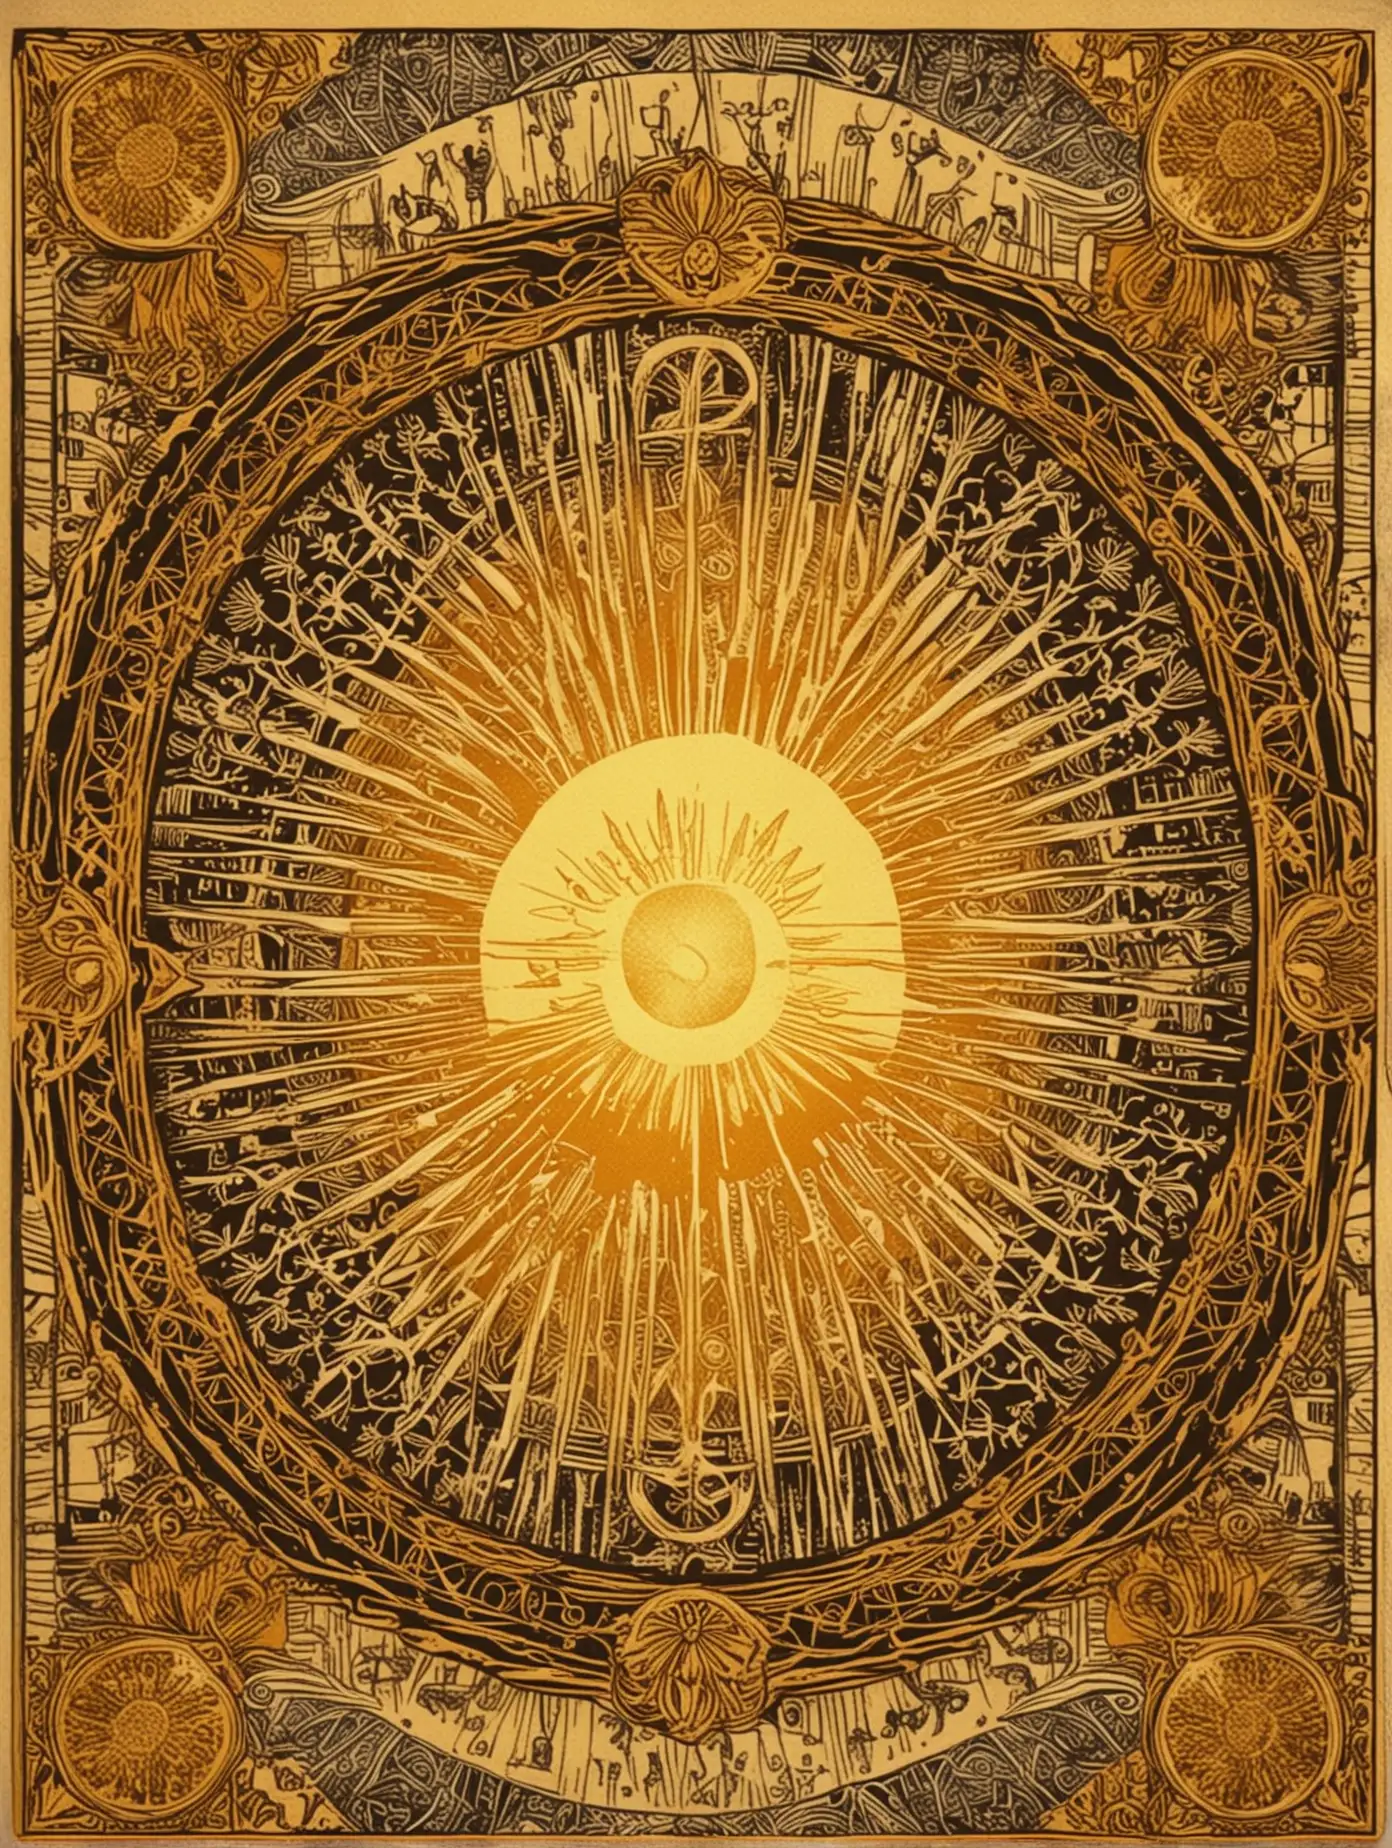 Slavyansky-Style-Tarot-Card-with-Symmetrical-Ornament-and-Golden-Sunrise